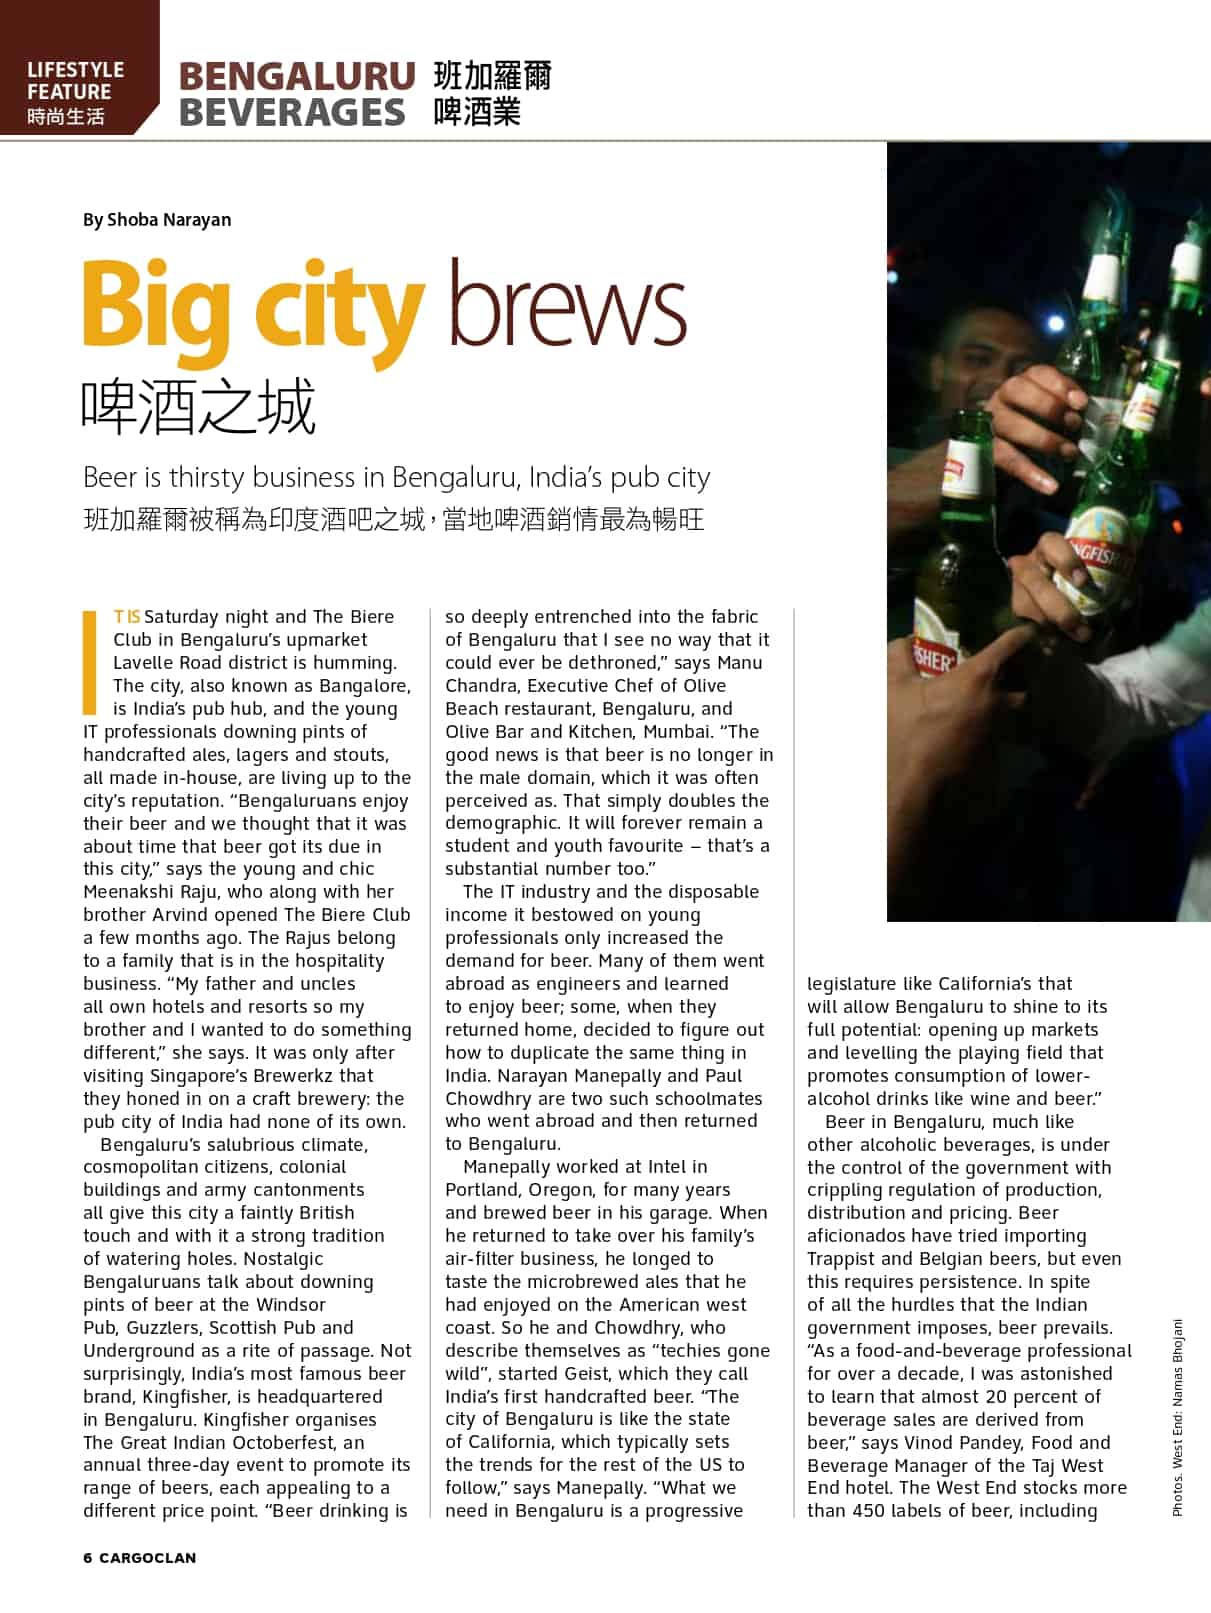 Cargo Clan, Cathay Pacific, Big City Brew, Beer, Bangalore